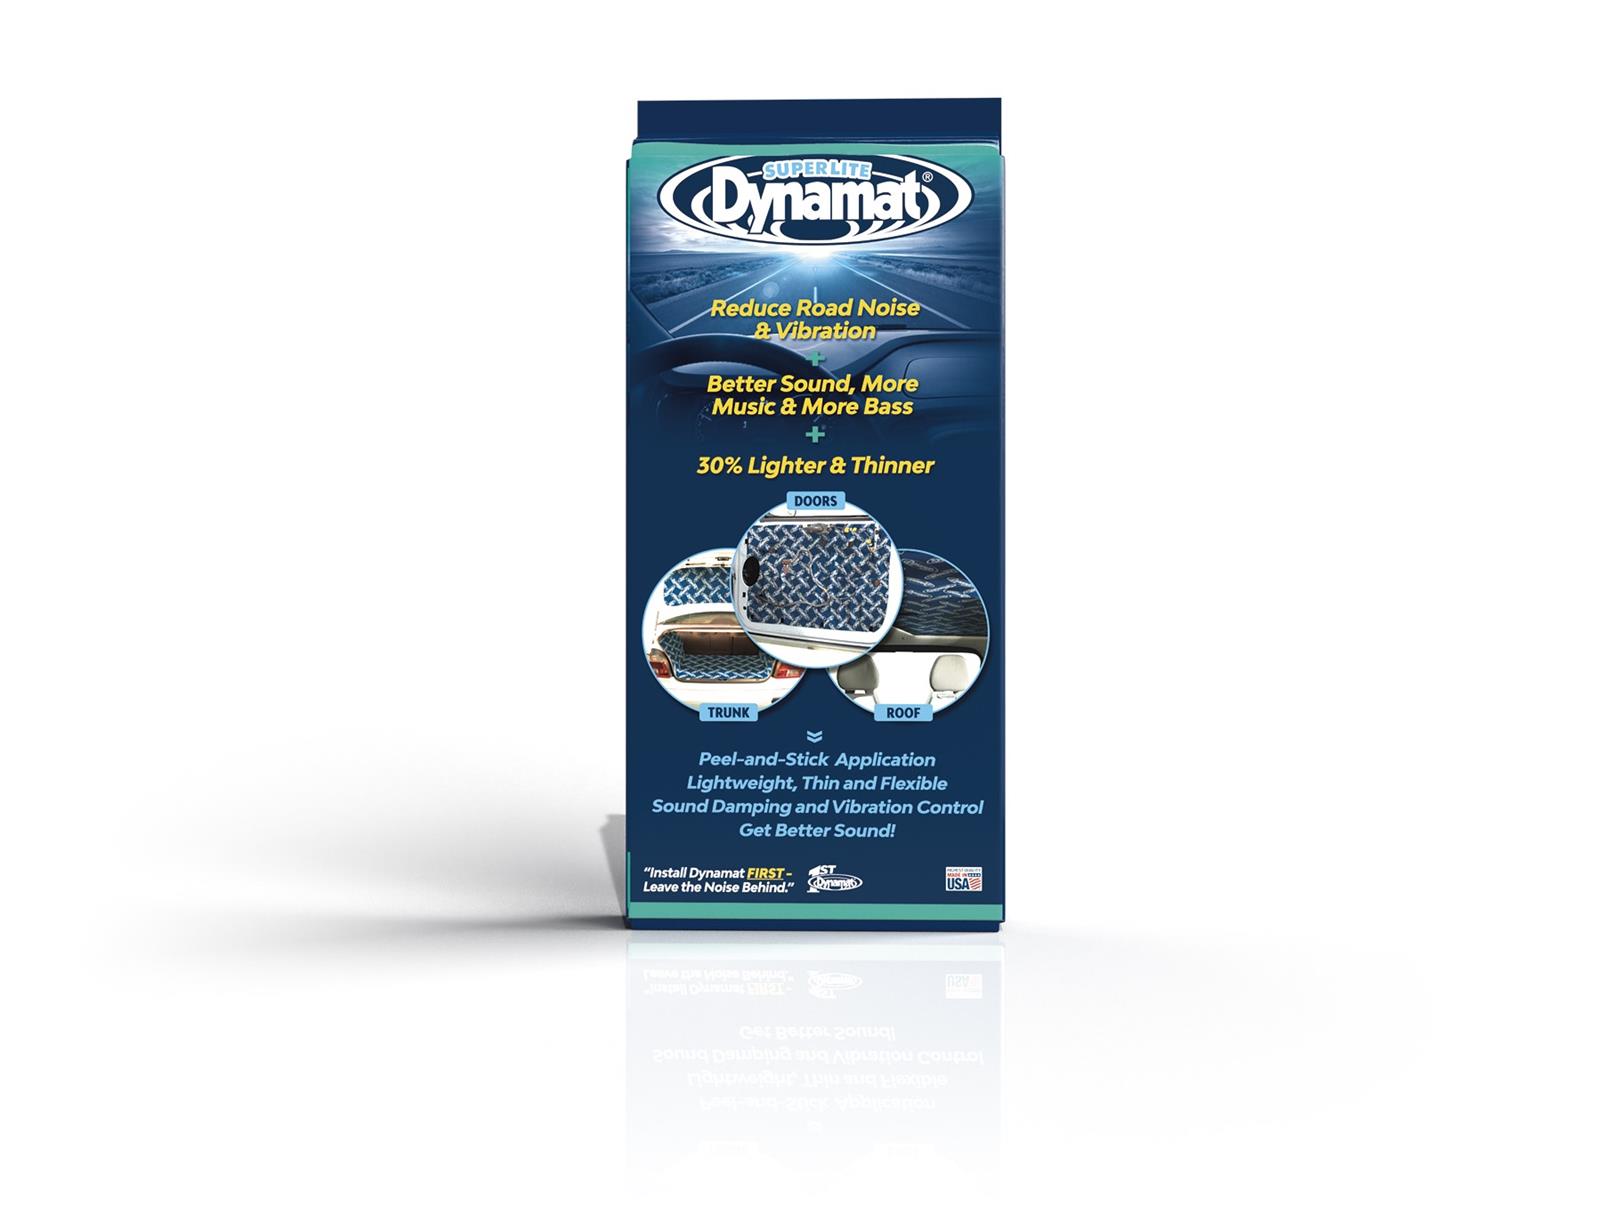 Dynamat 10612 18 x 32 Self-Adhesive Sound Deadener with